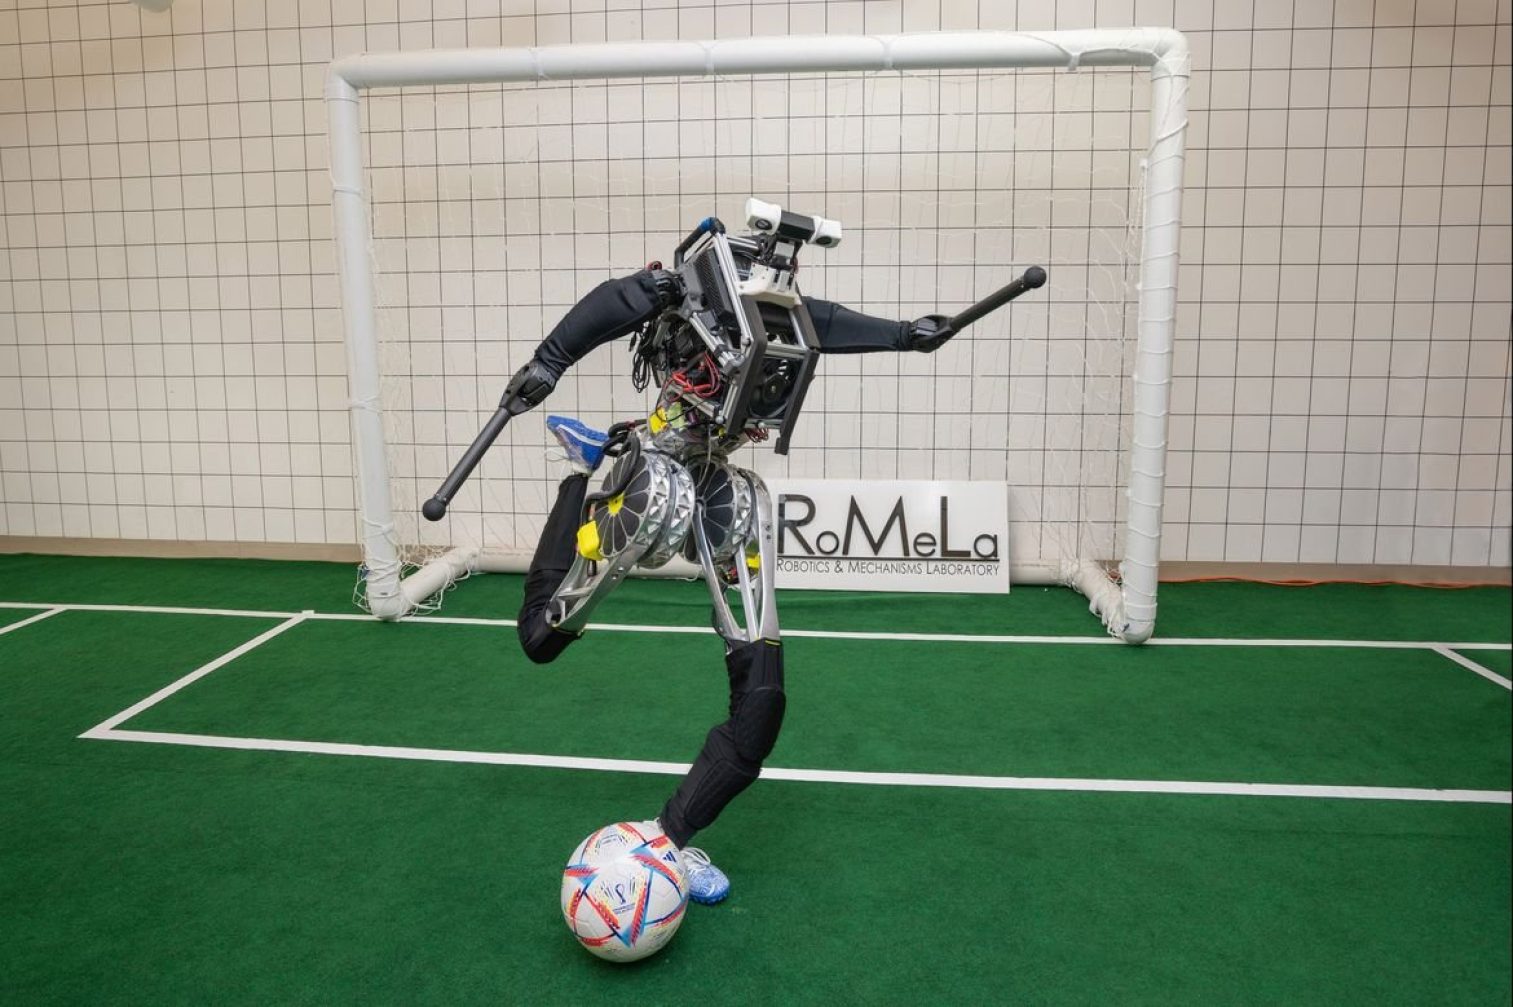 Artemis+humanoid+robot+kicking+a+soccer+ball+romela+at+ucla Hero